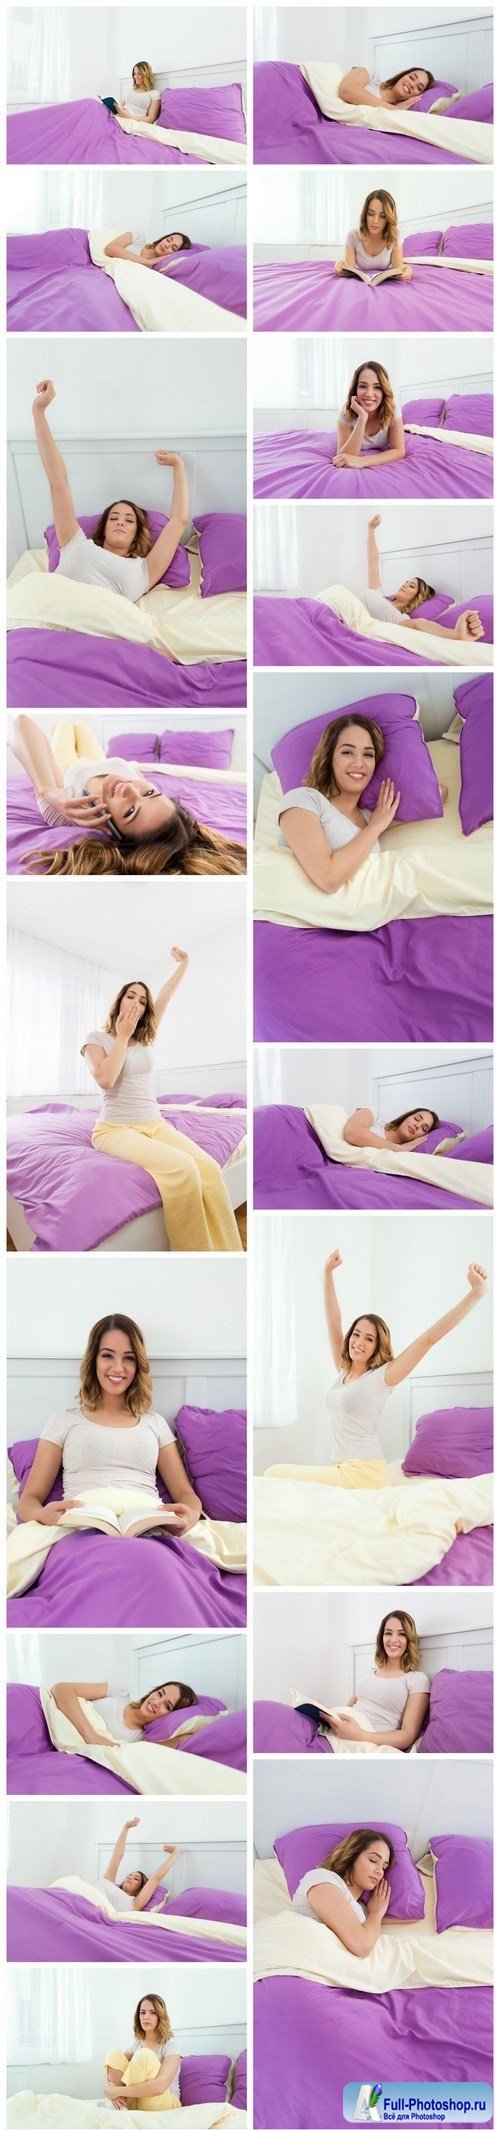 Beautiful young woman is sleeping in bed - 20xUHQ JPEG